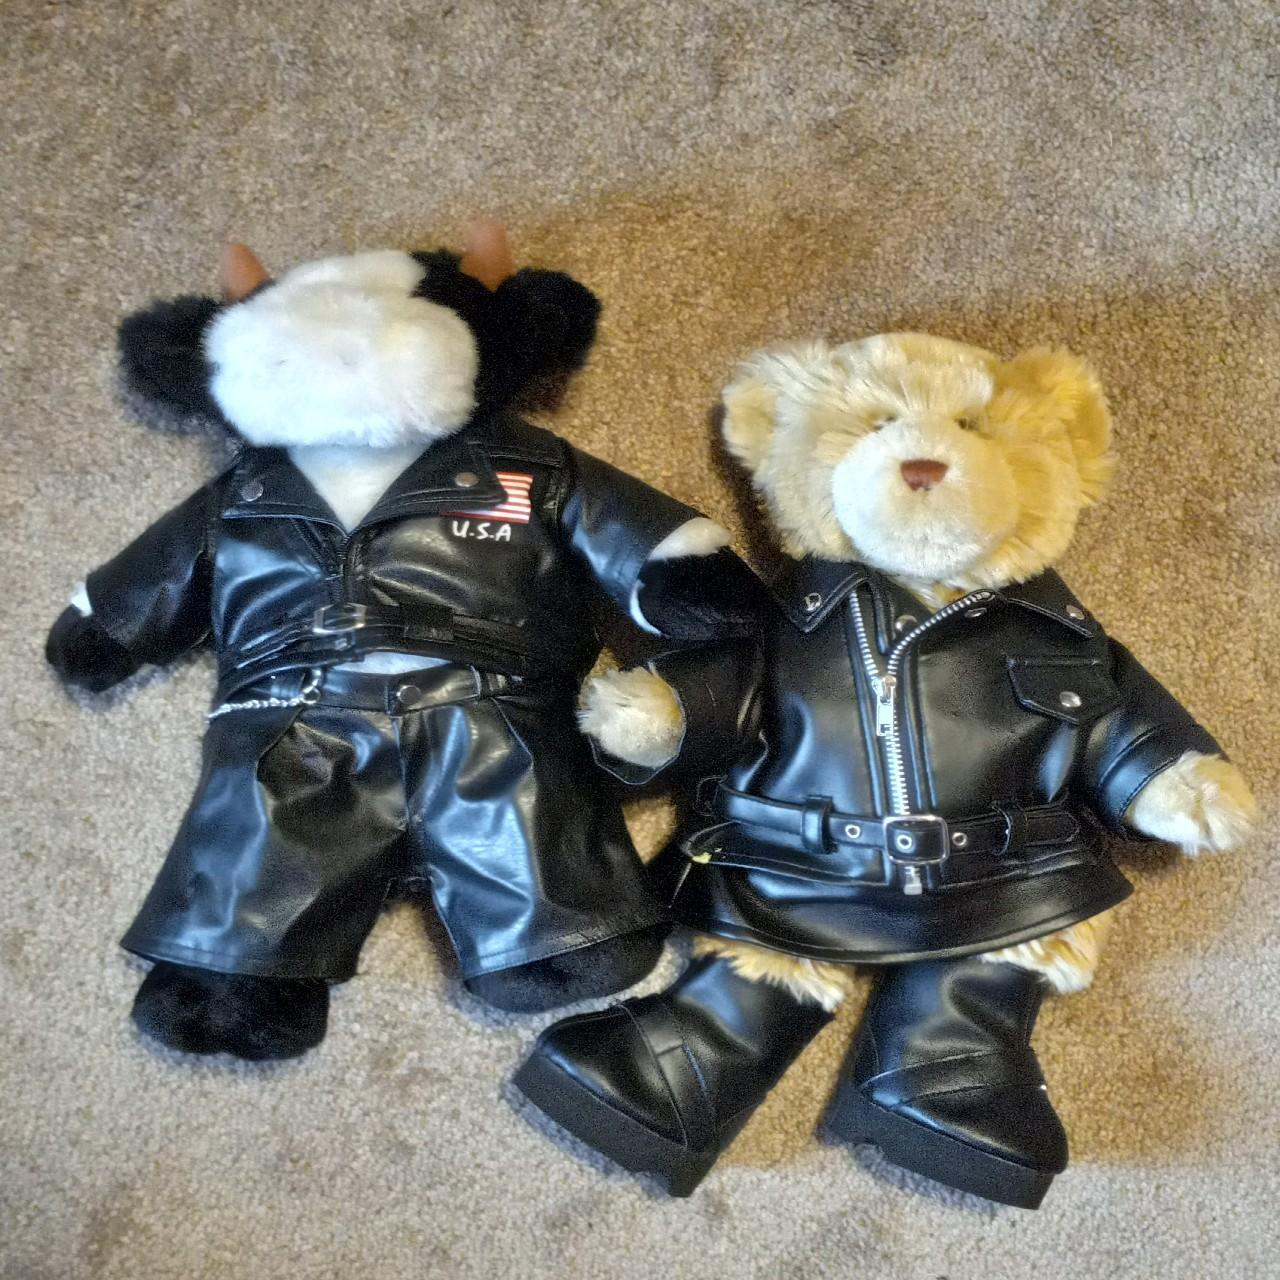 Harley Davidson Build-A-Bear Plush Stuffed Animal with Leather Jacket Jeans